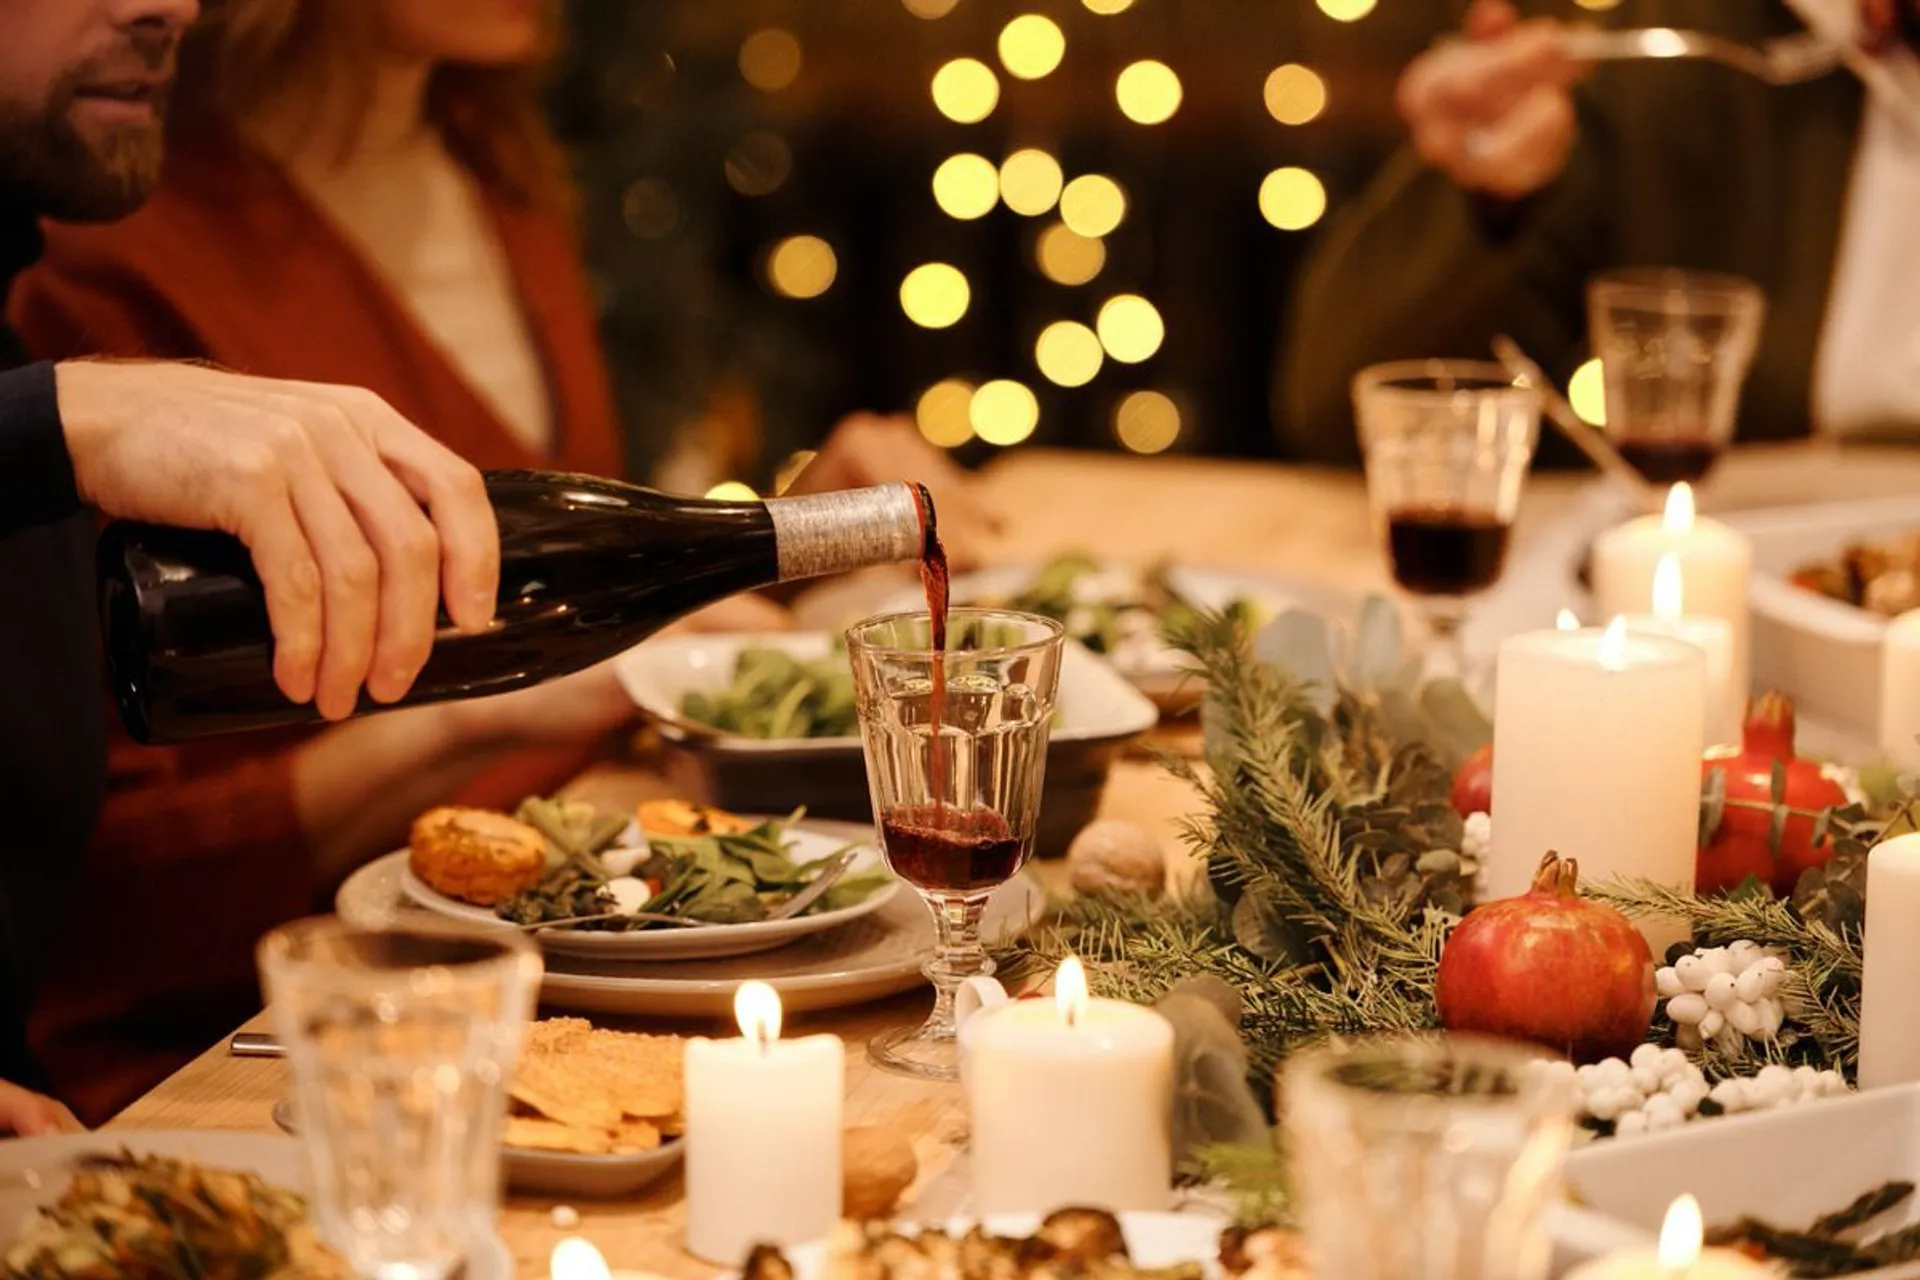 Tips to save on Christmas meals